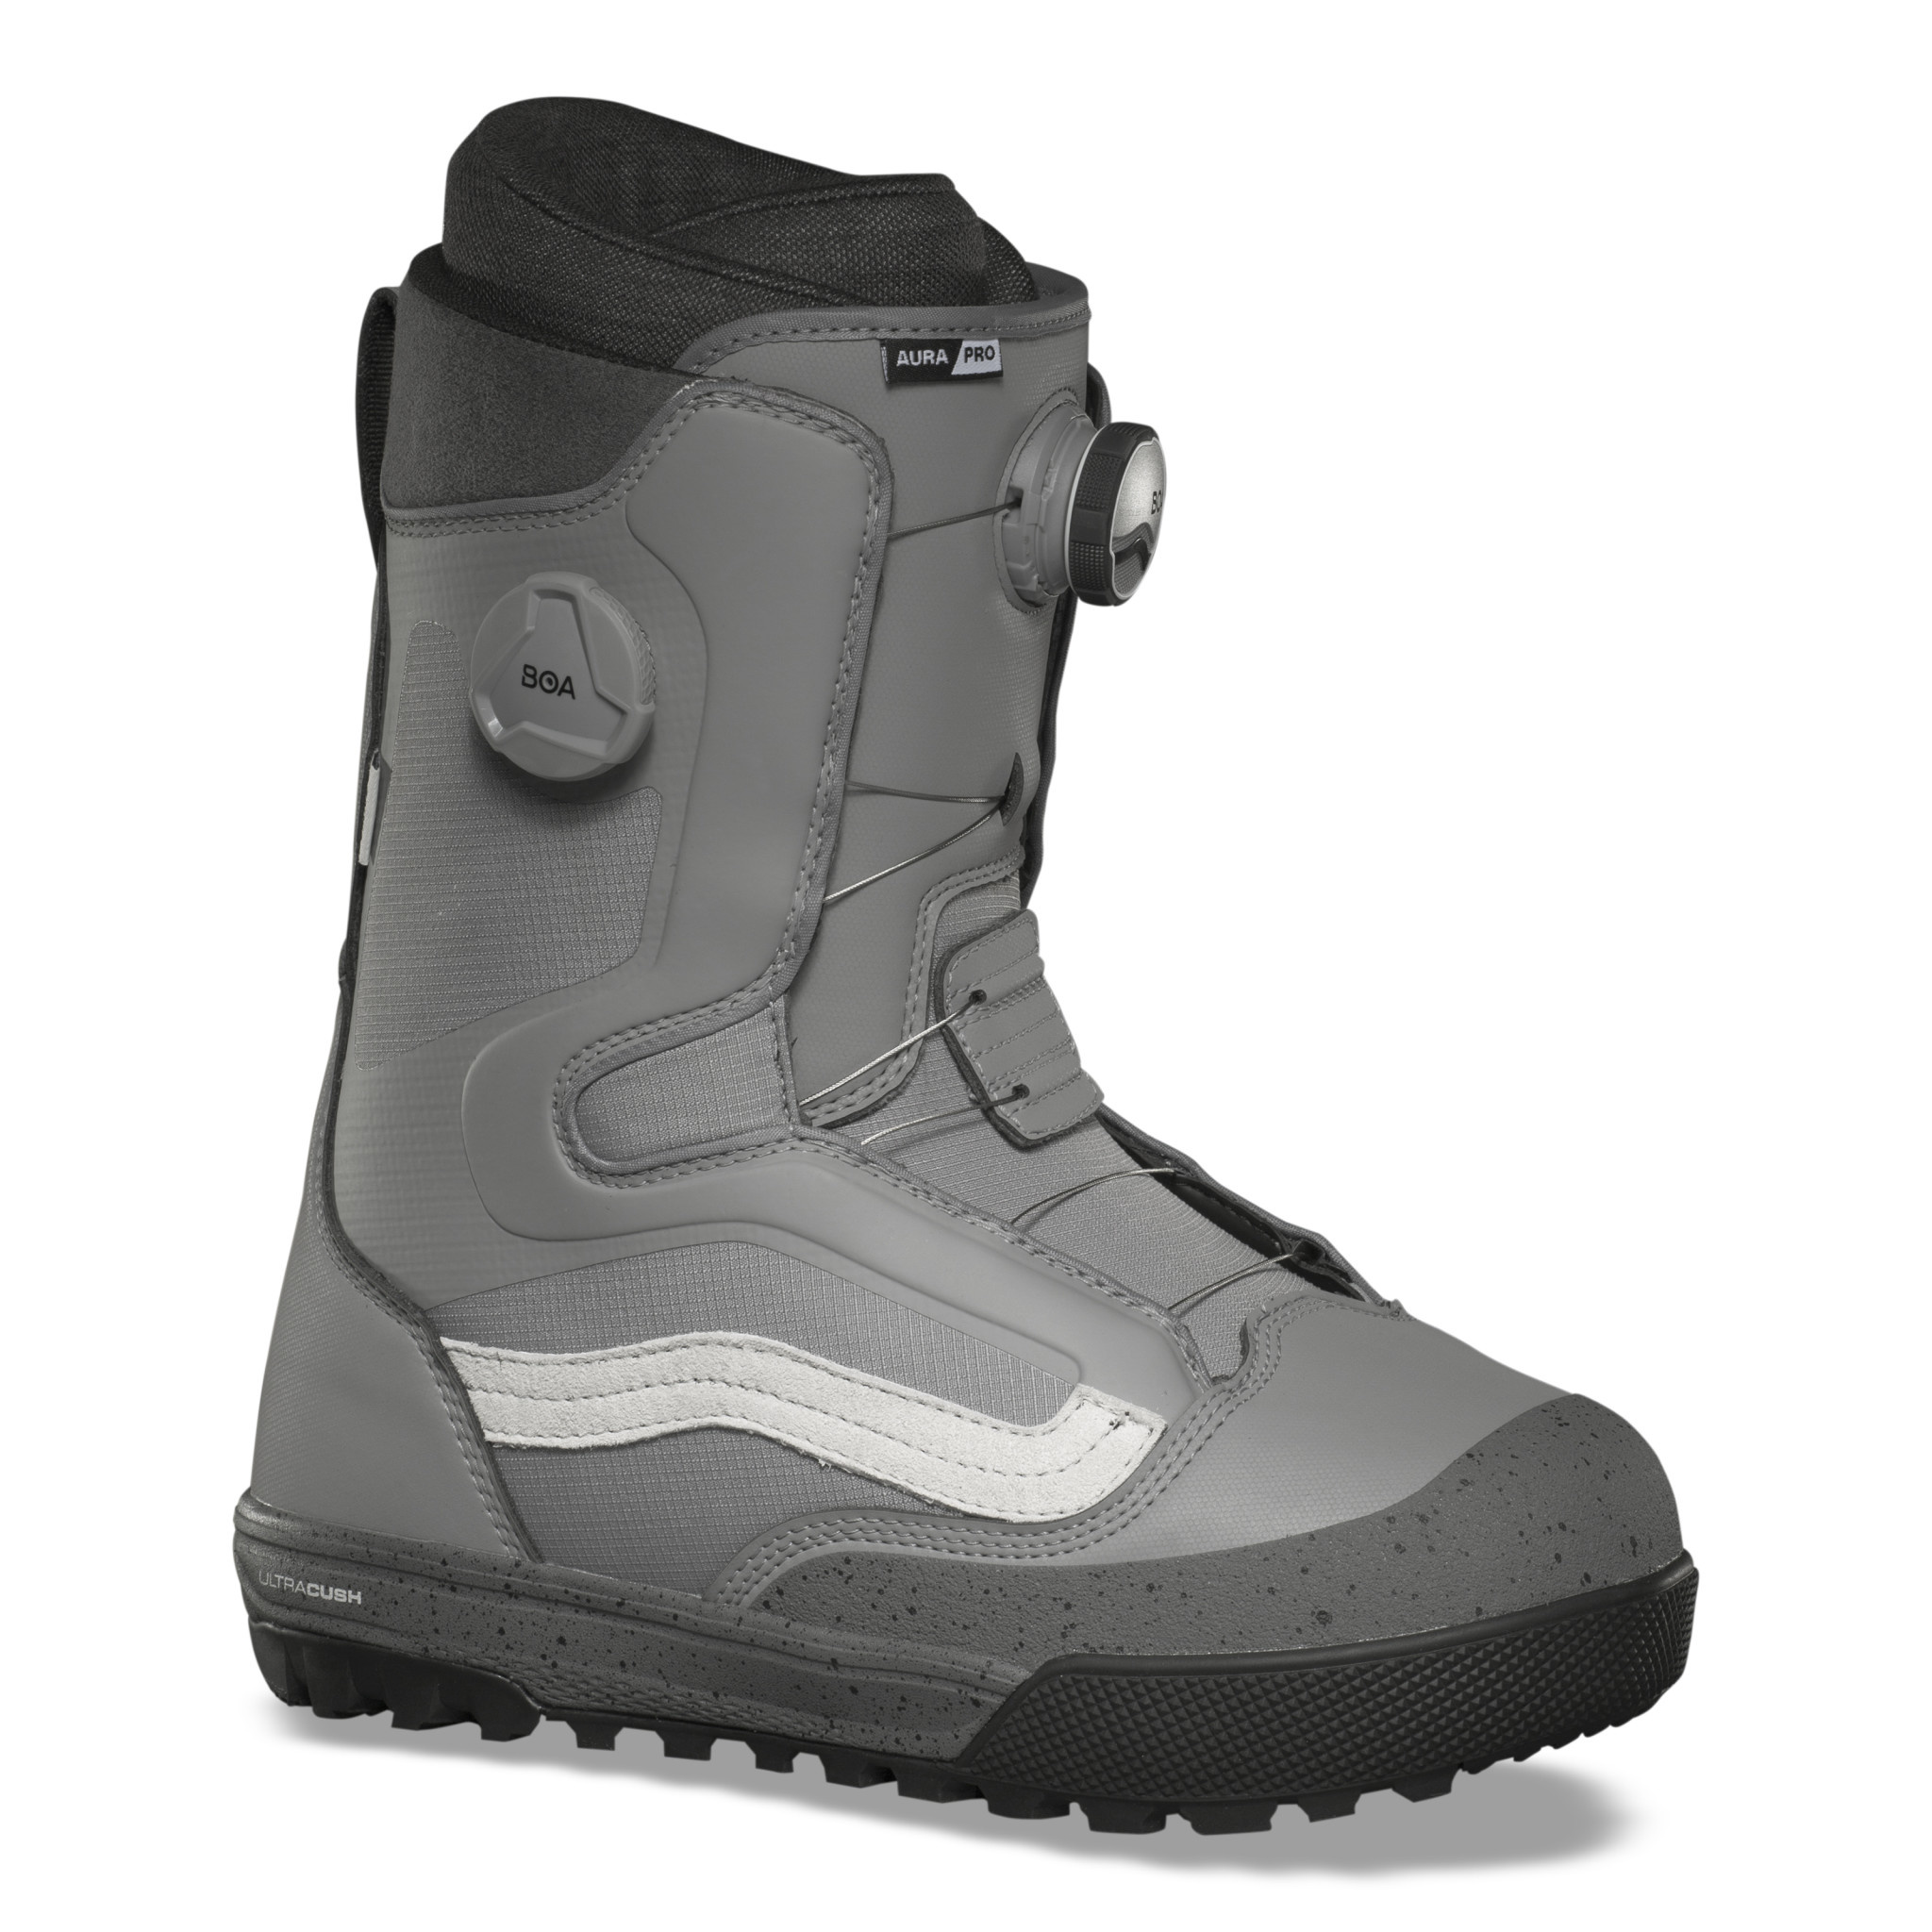 Aura Pro Snowboard Boot (2021 